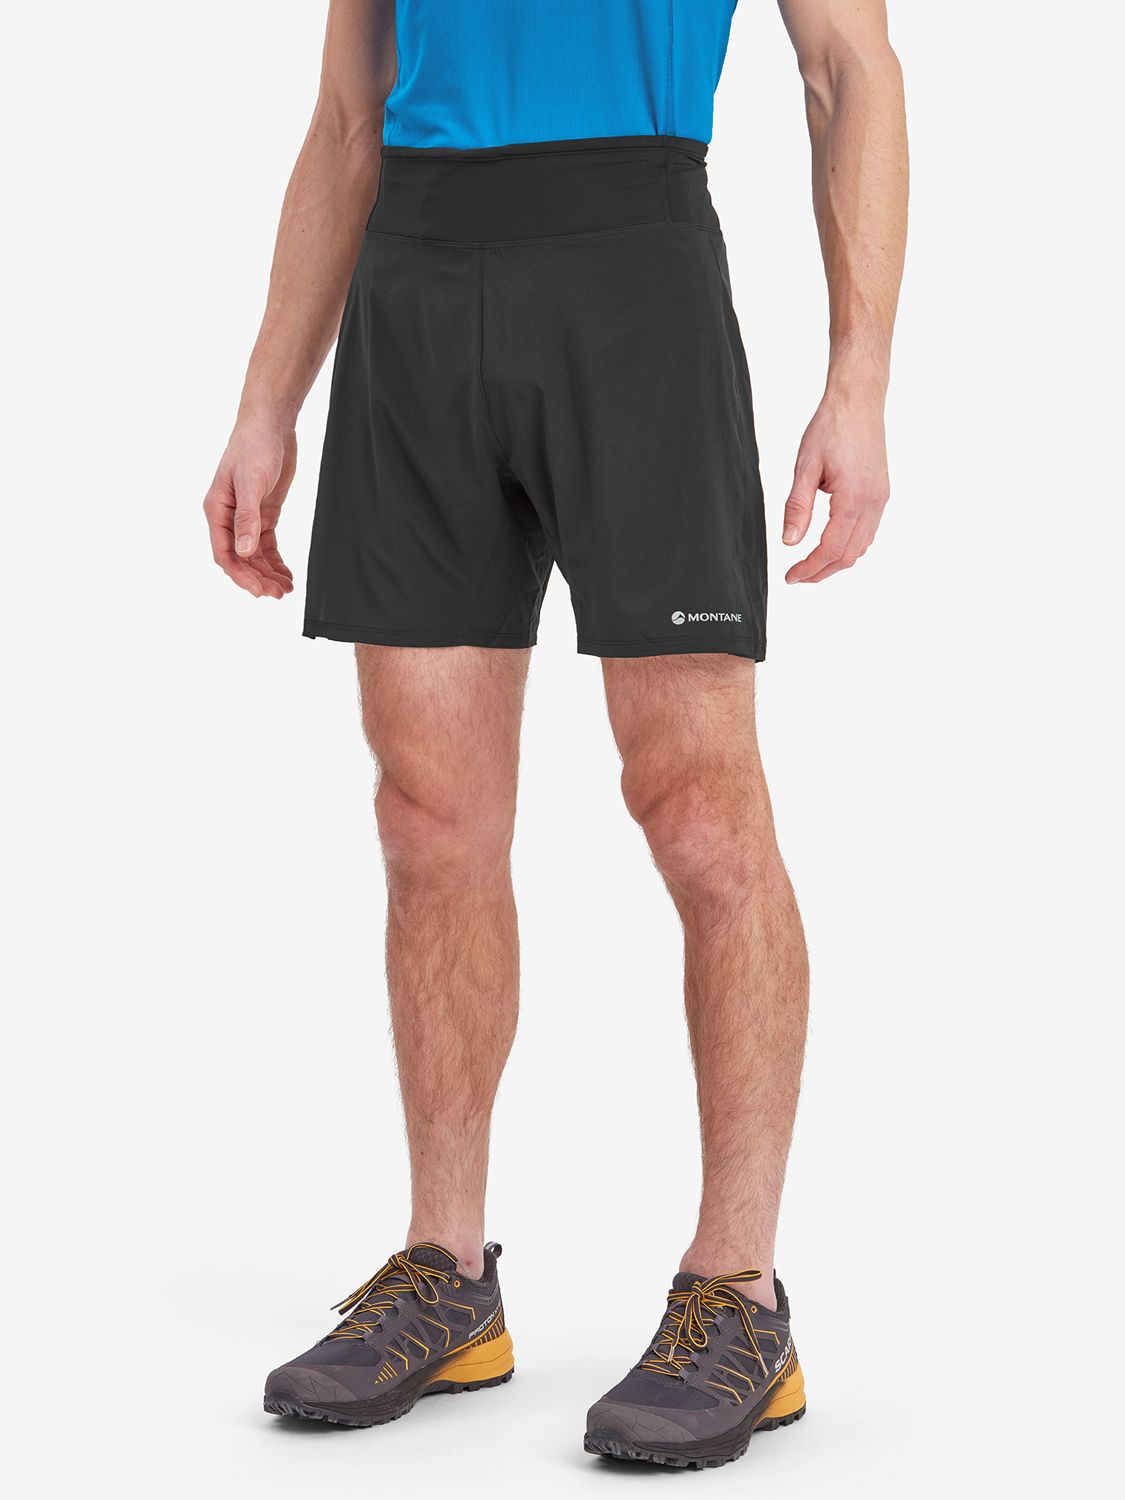 Montane Slipstream 7" Shorts, Black, XS